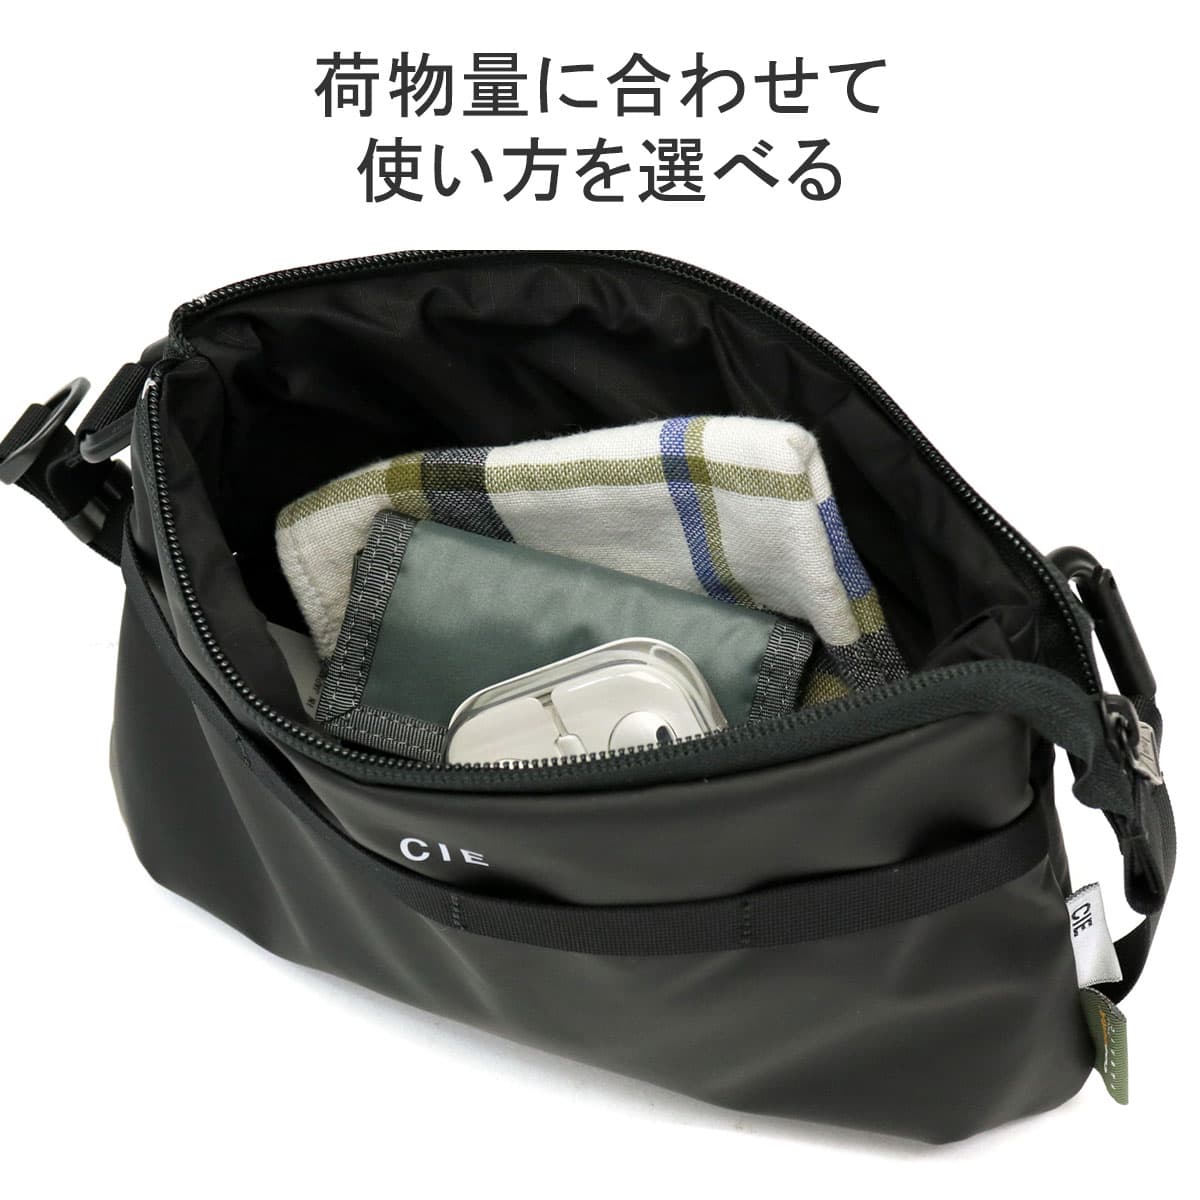 CIE シー GRID3 MINI SHOULDER BAG サコッシュ 032052｜【正規販売店